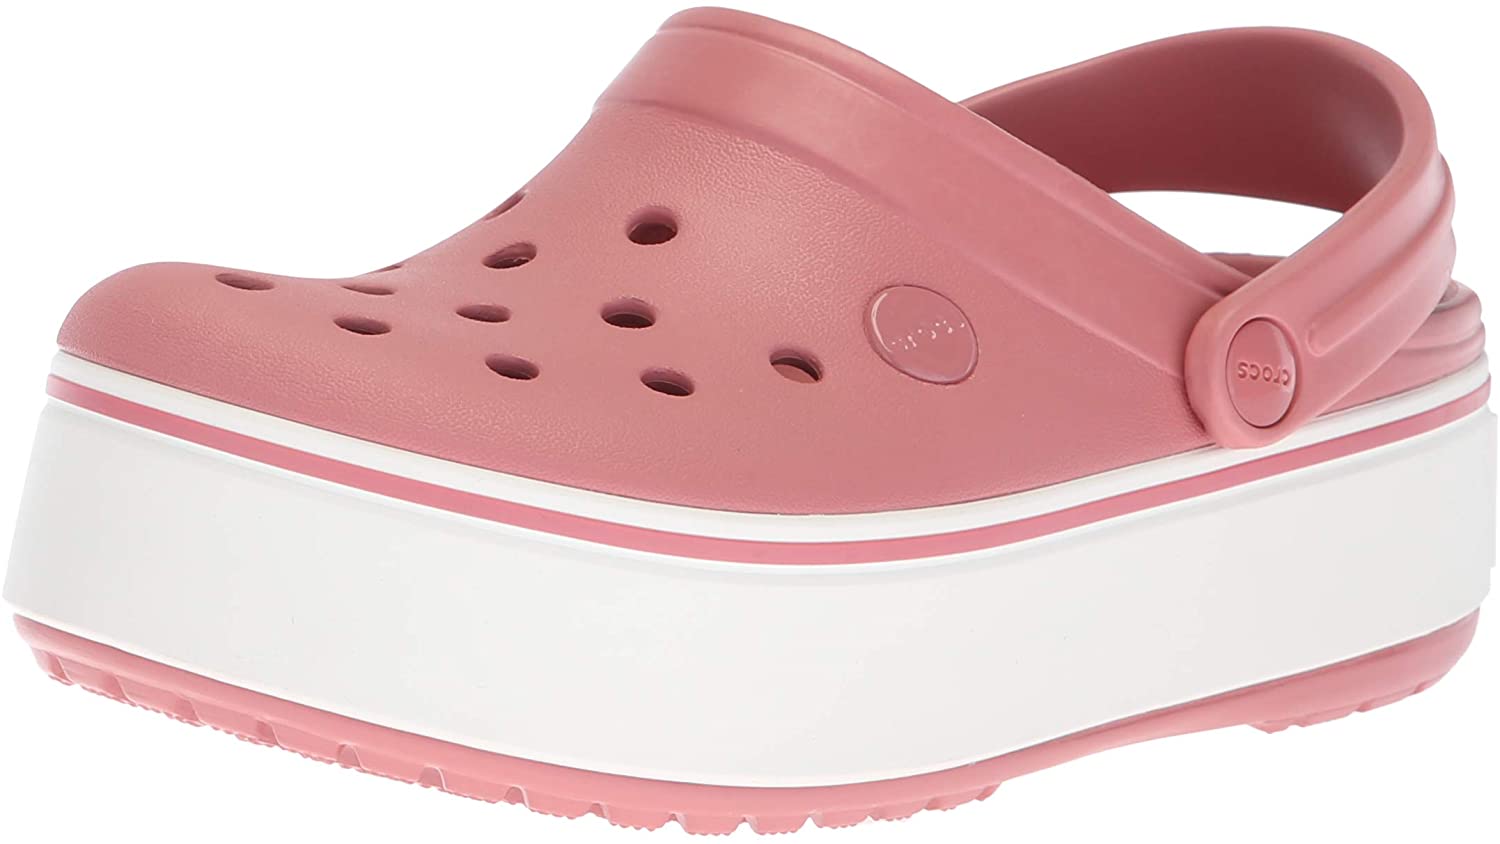 Chanel inspired Charmed Crocs  Pink crocs, Crocs fashion, Chanel inspired